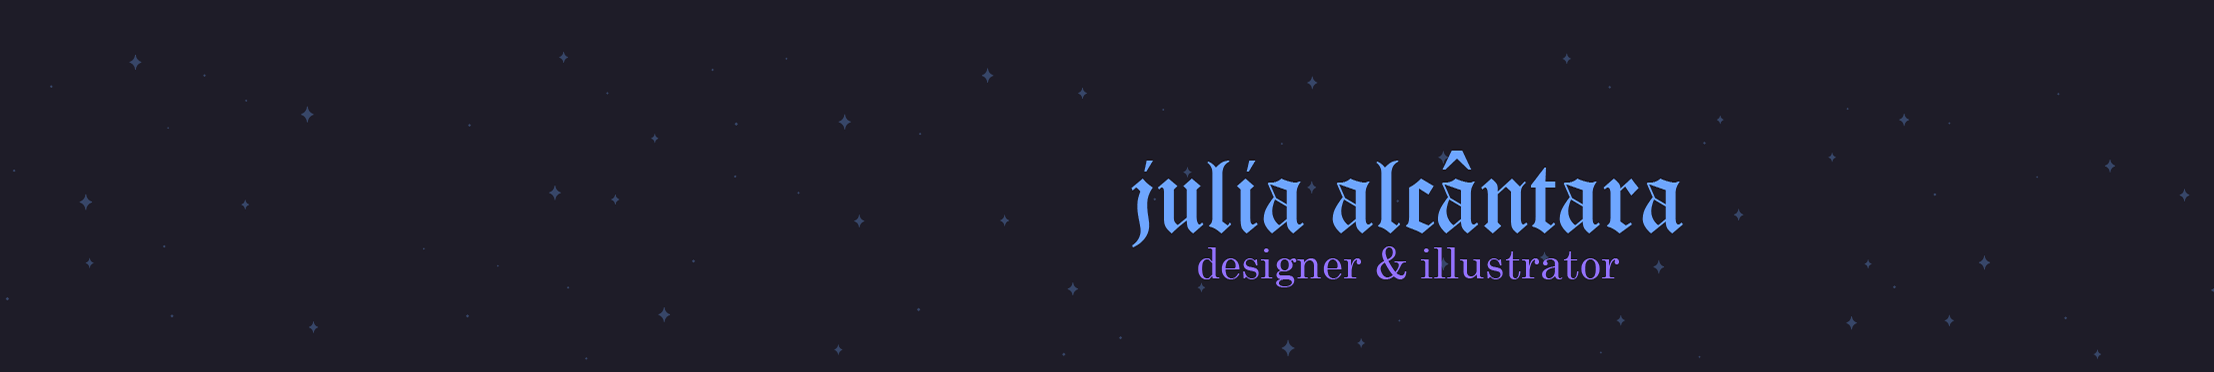 Julia Alcântara's profile banner